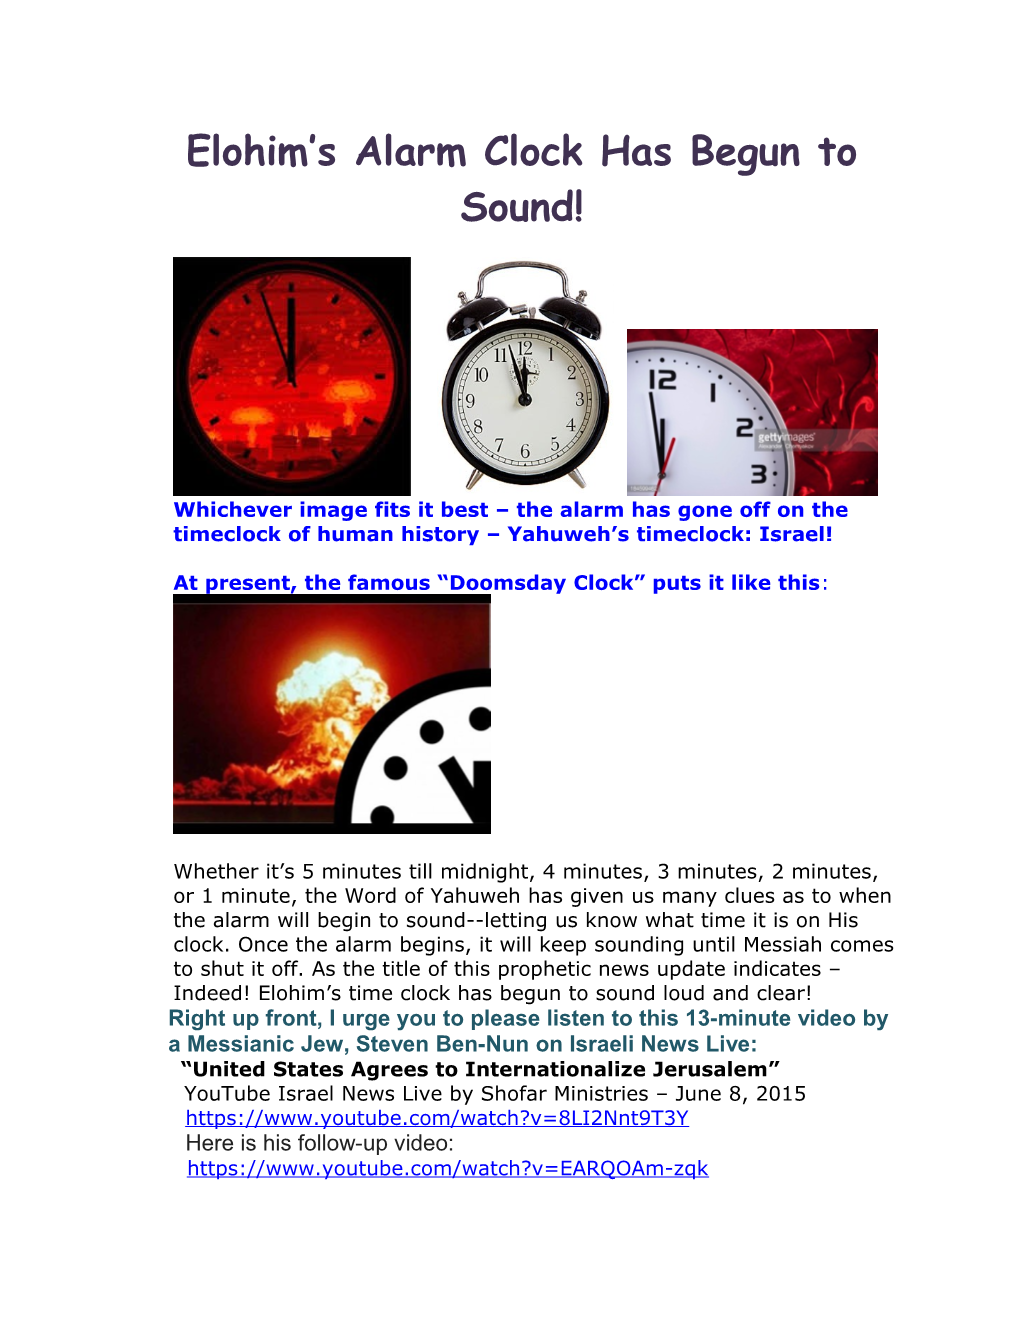 Elohim S Alarm Clock Has Begun to Sound!